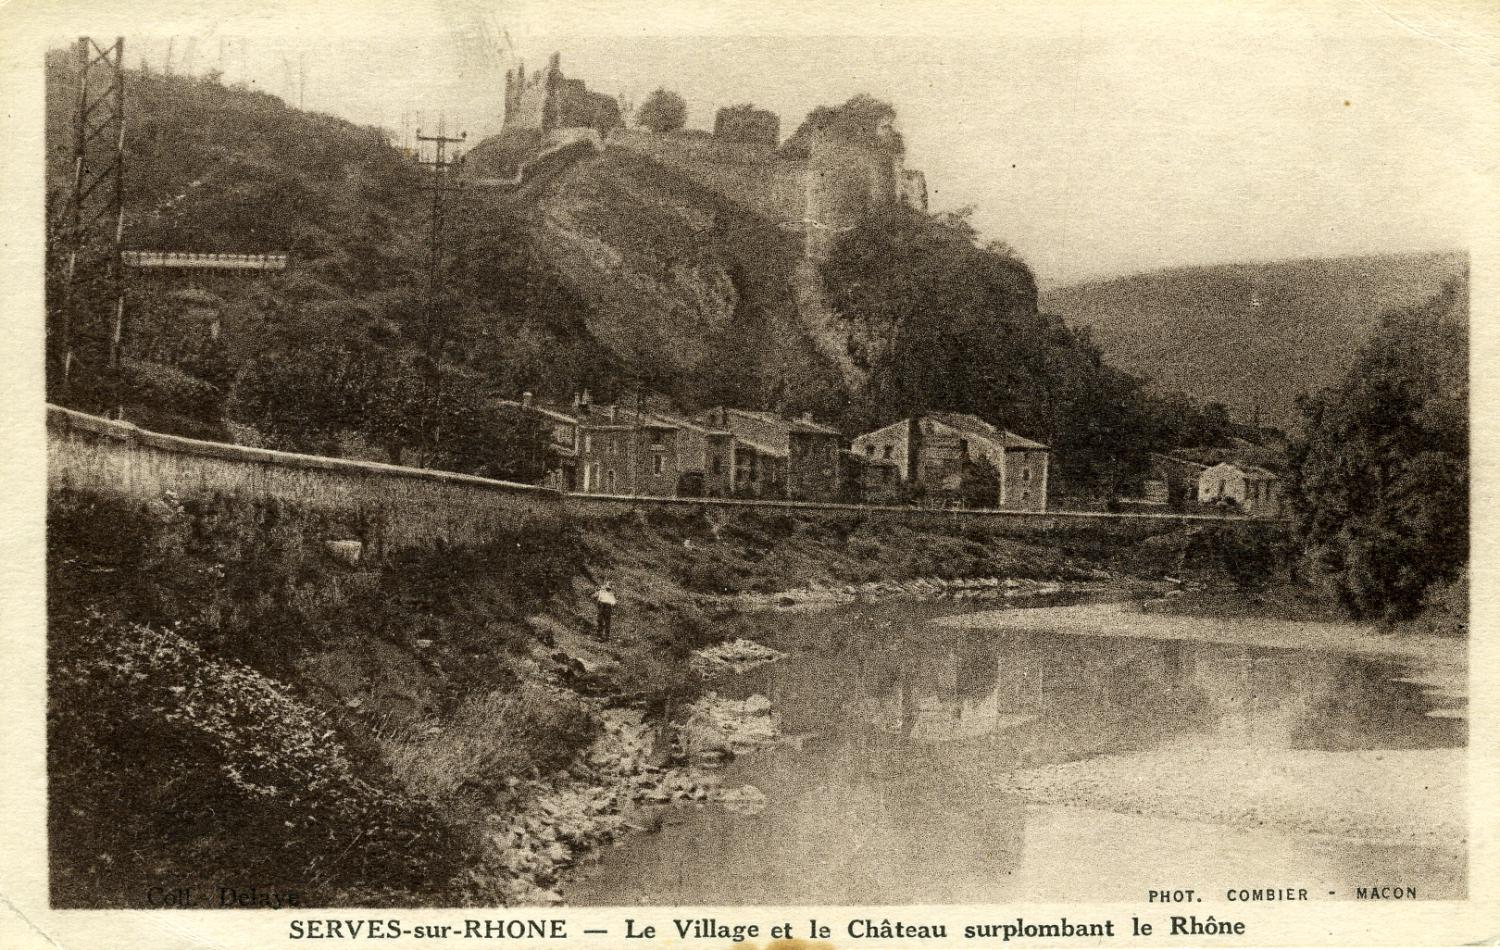 Serves-sur-Rhône